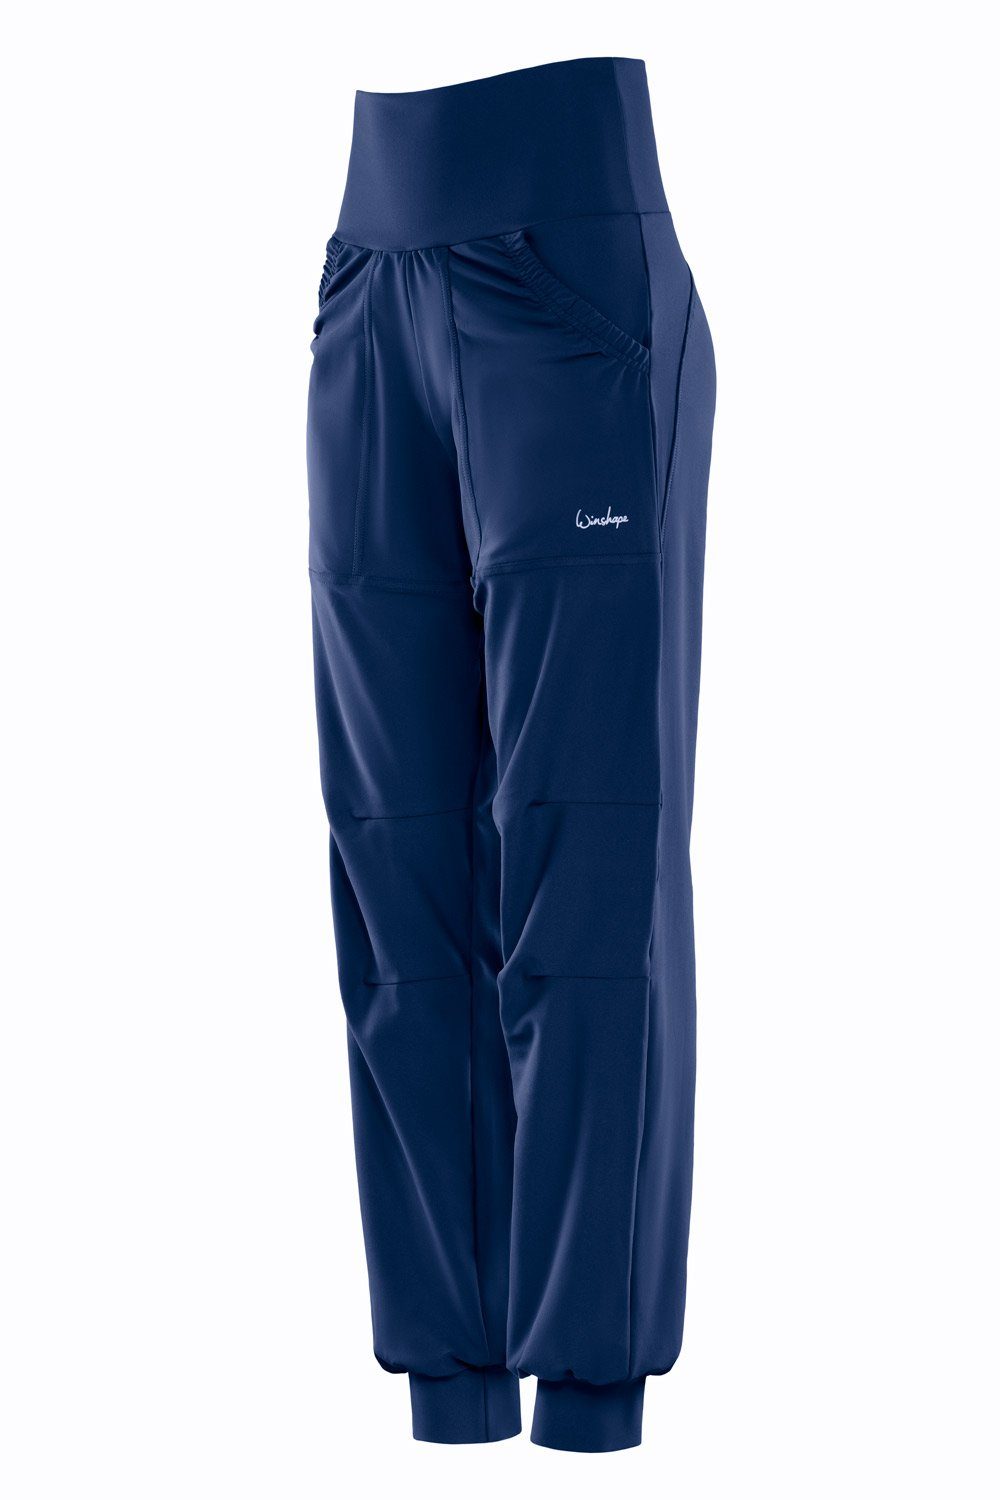 Functional High Sporthose Trousers LEI101C Winshape Time dark Waist Comfort Leisure blue